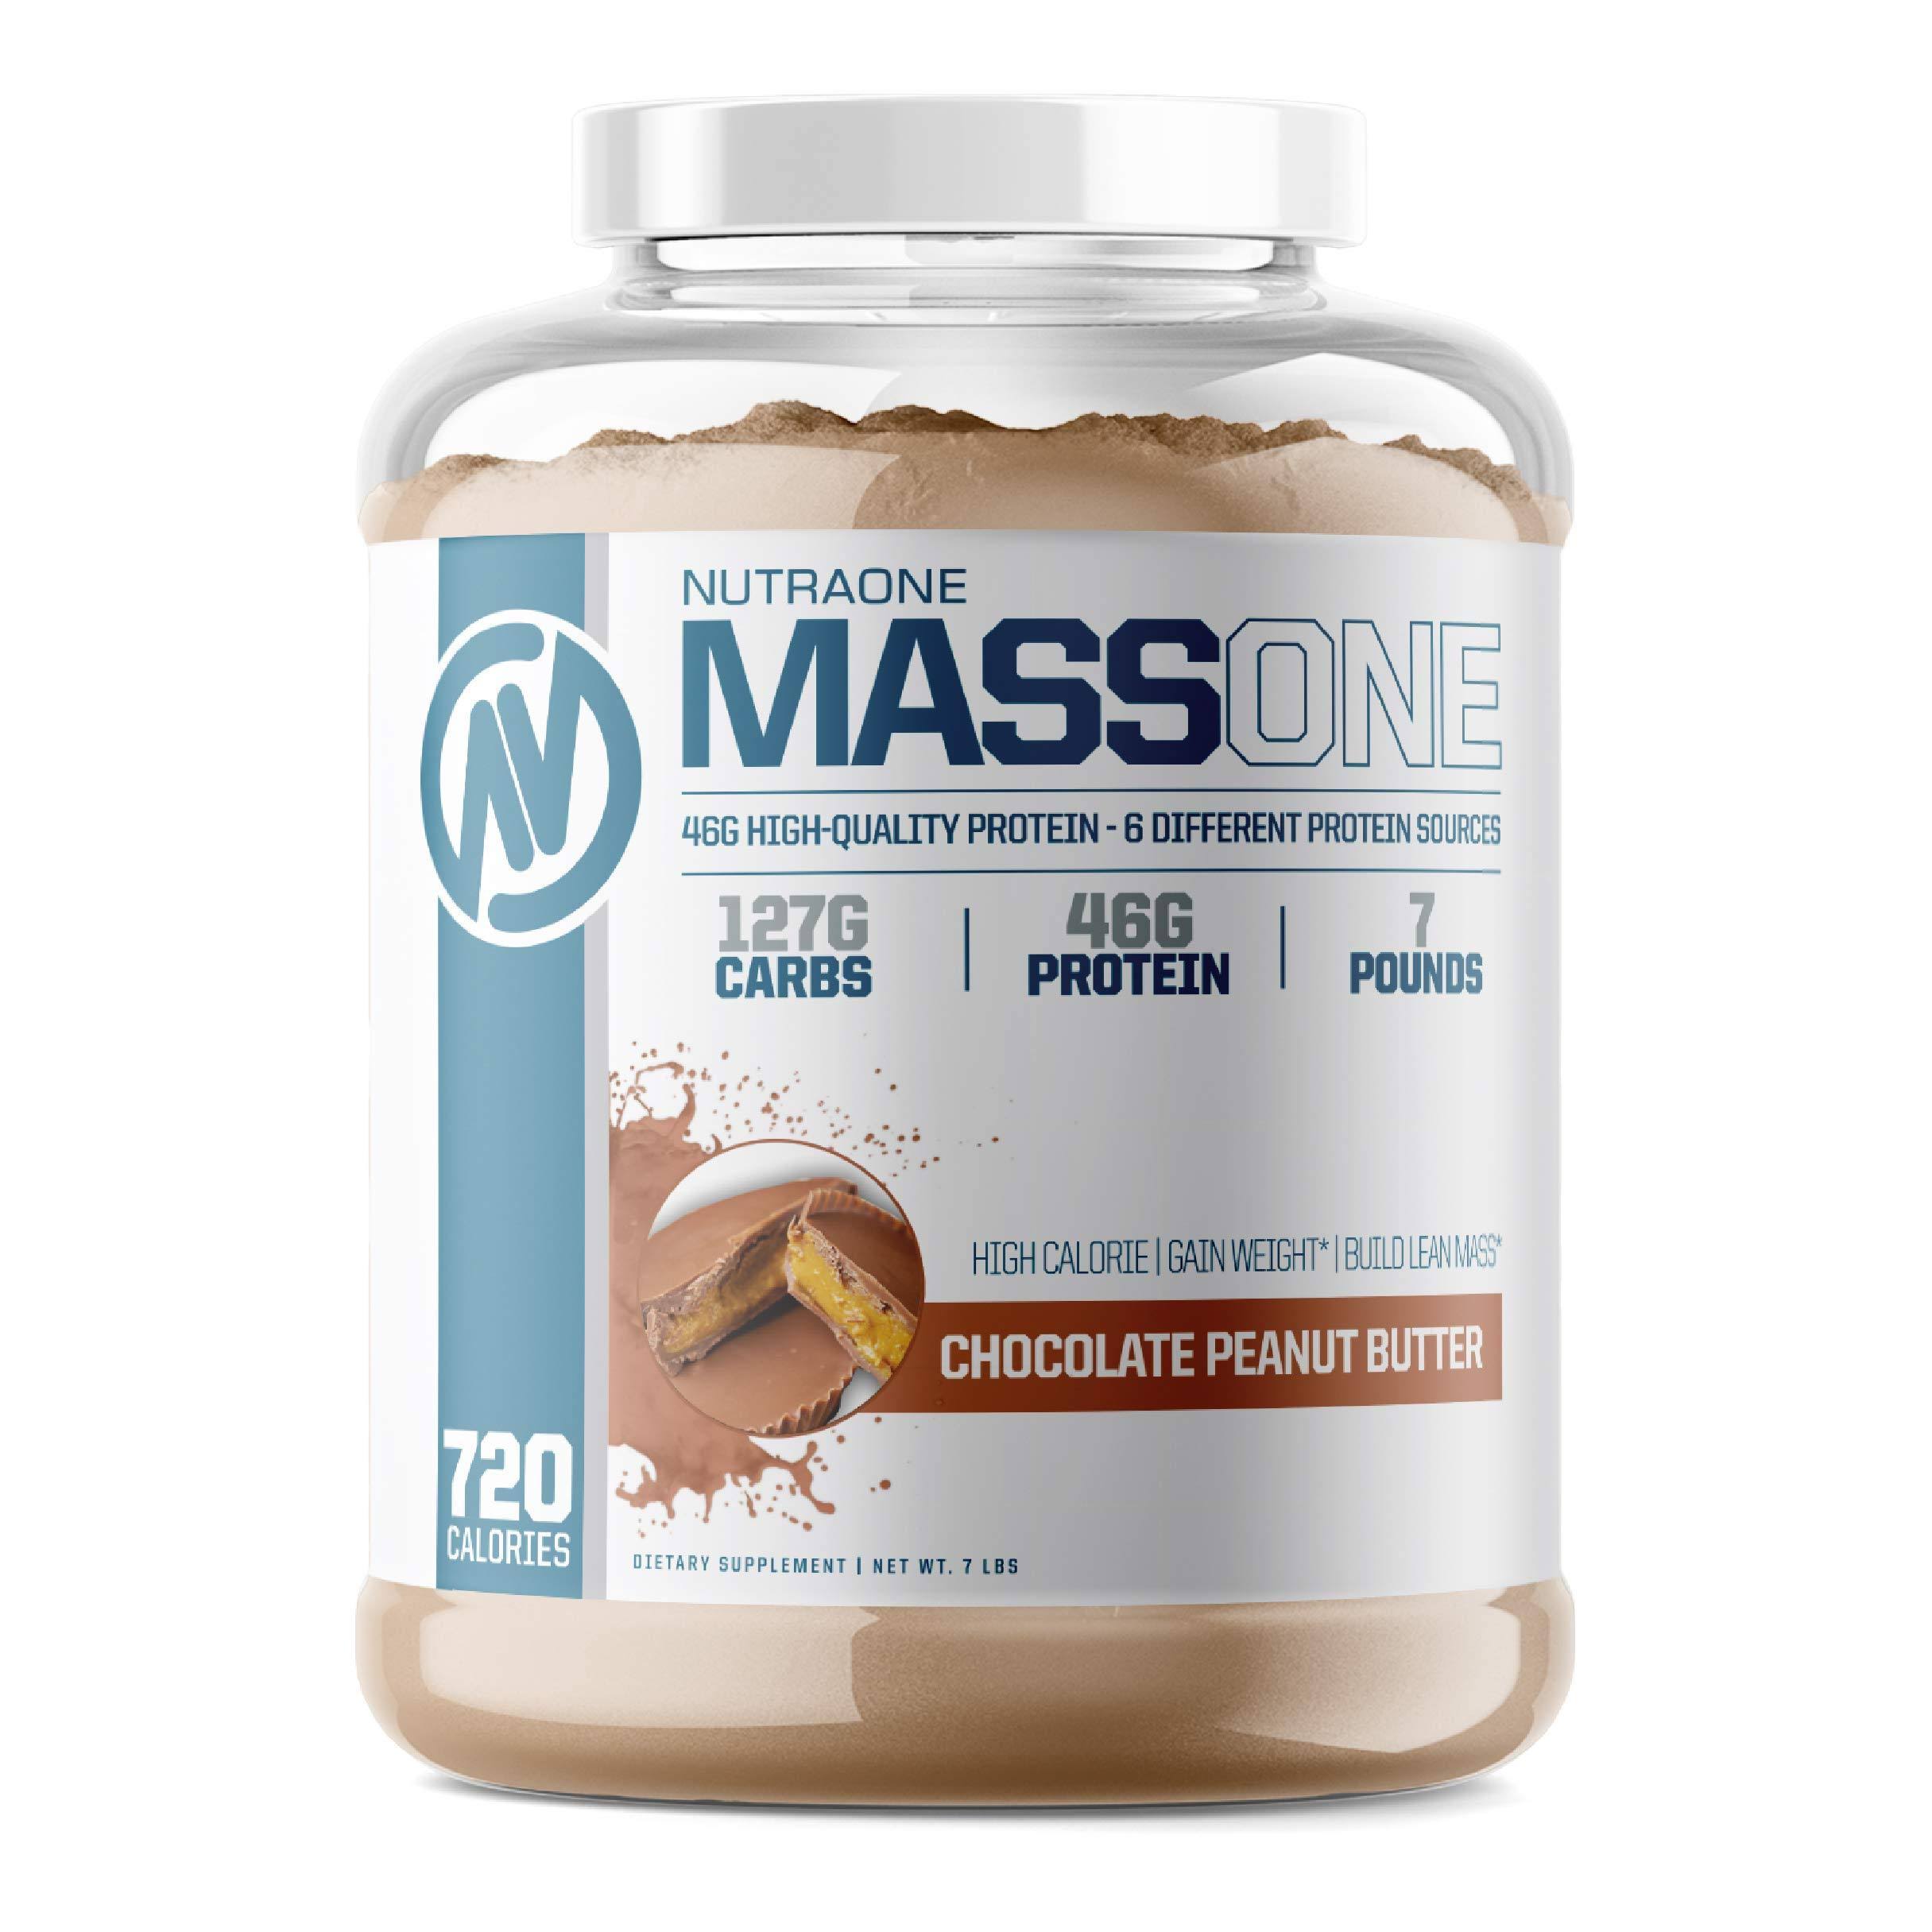 Massone Mass Gainer Protein Powder by NutraOne - Gain Weight protein Meal